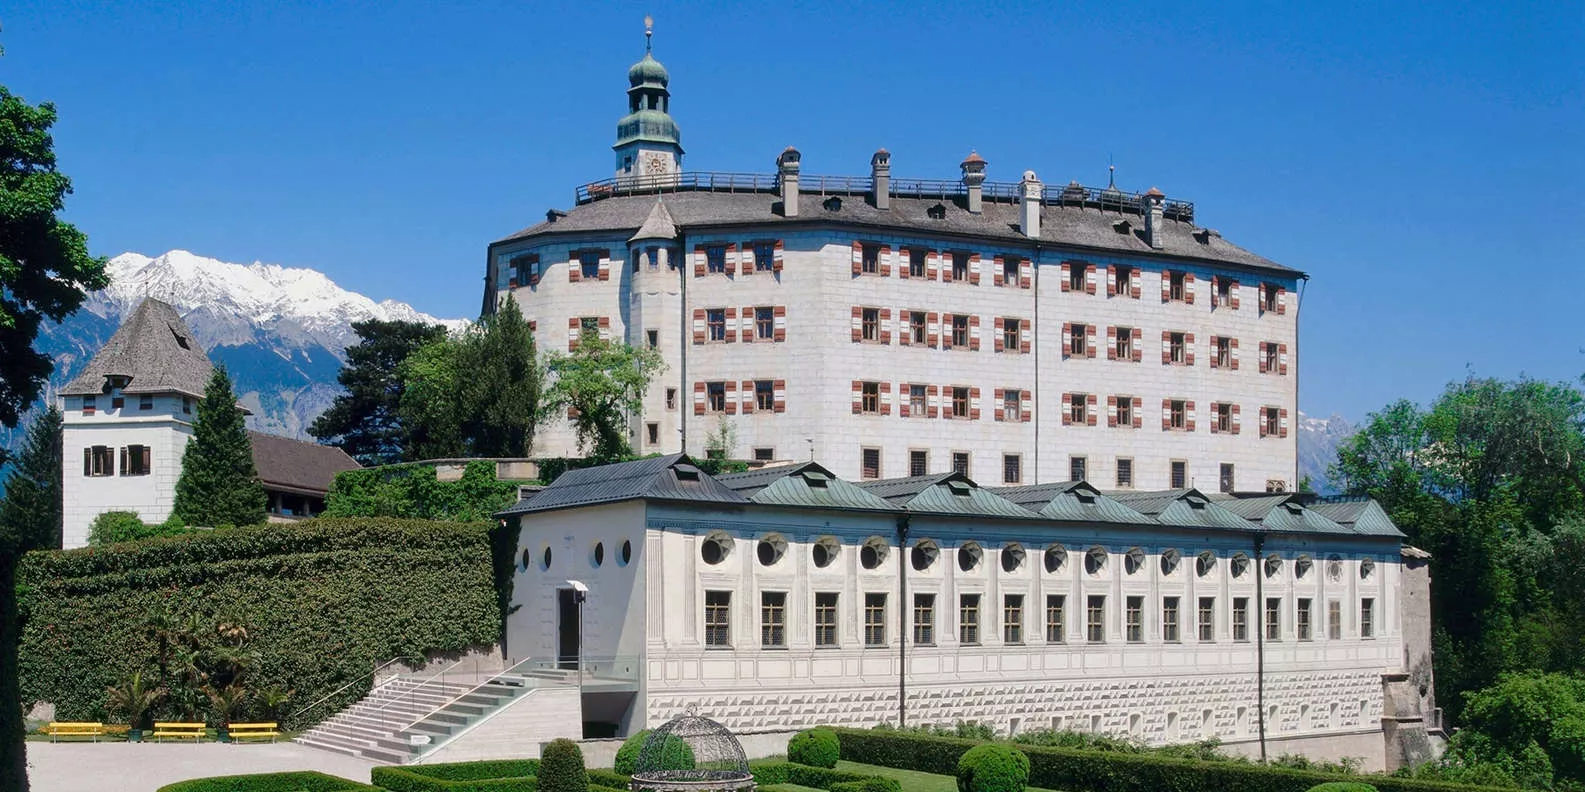 Schloss Ambras Innsbruck in Austria, Europe | Castles - Rated 3.8